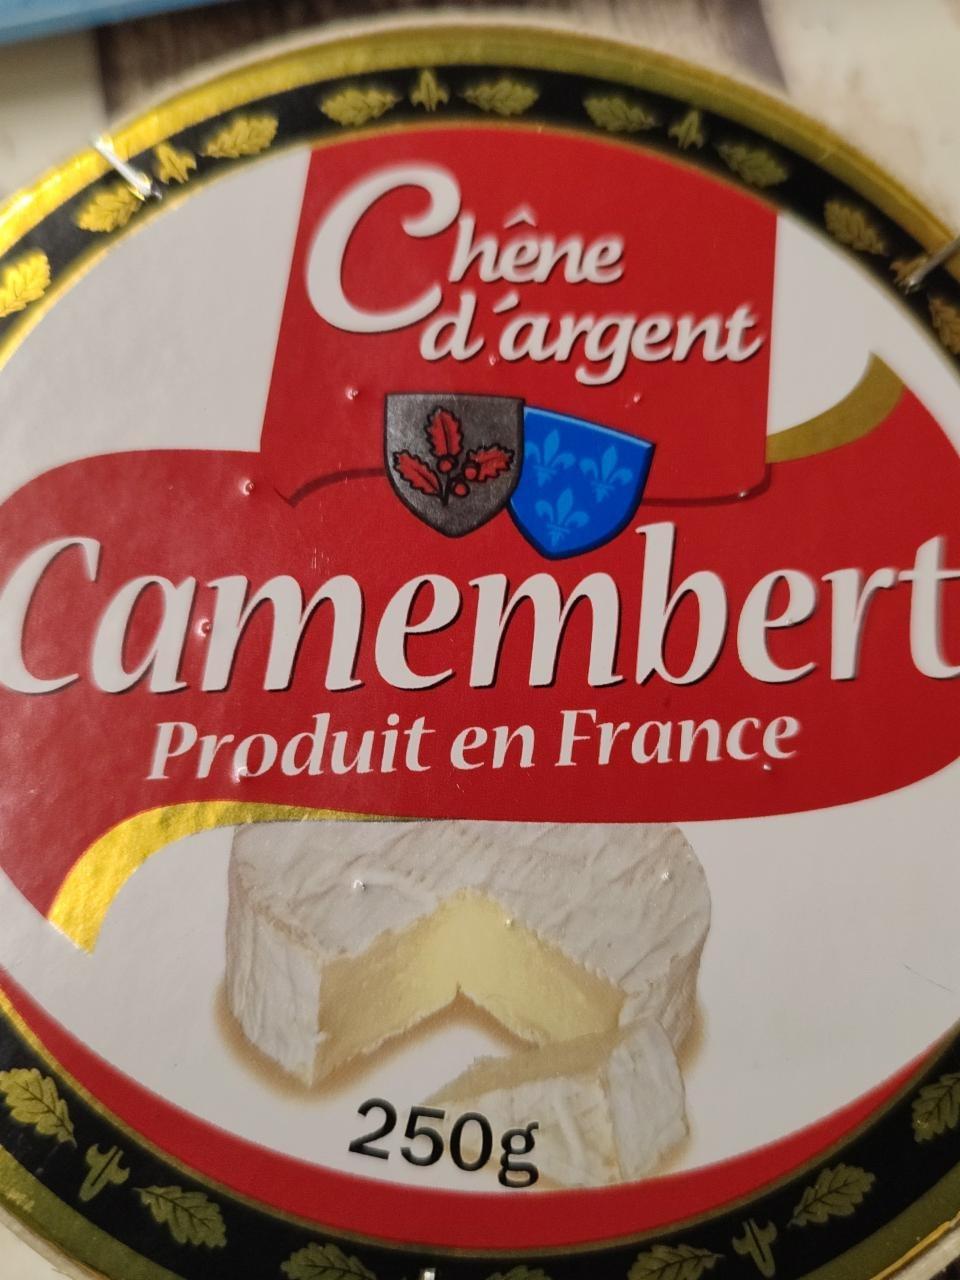 Képek - Camembert Chene d'argent